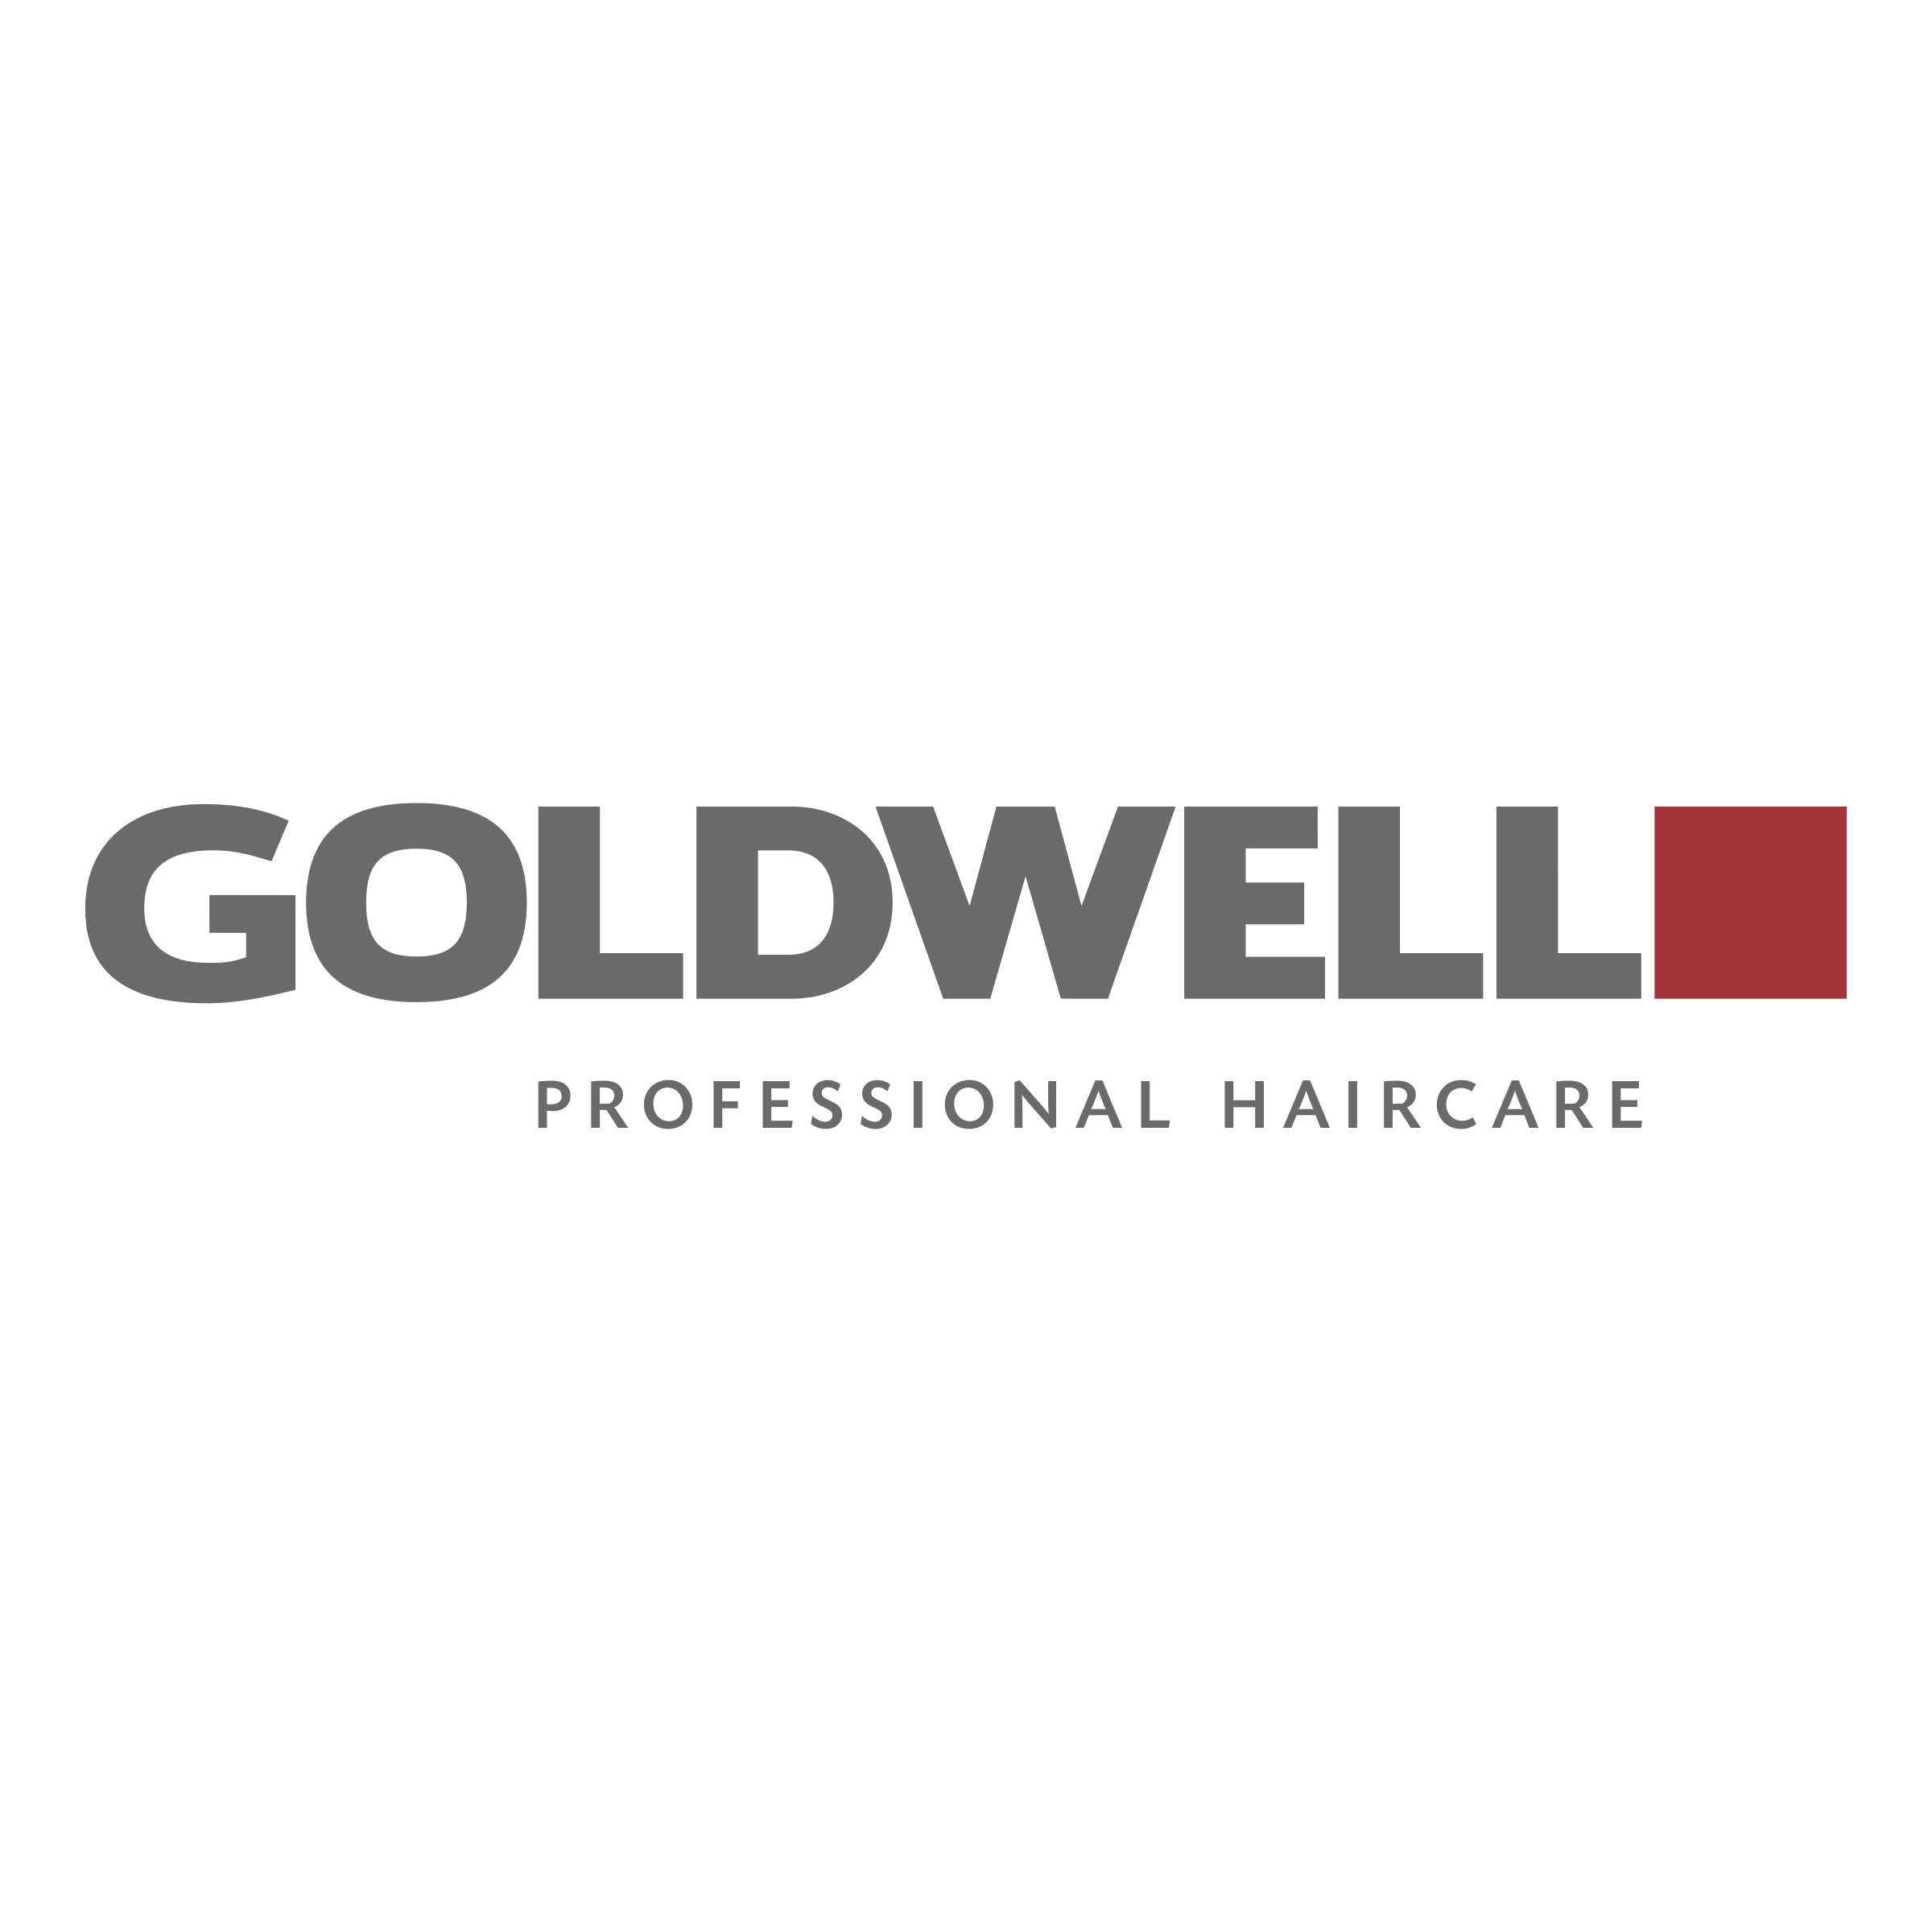 goldwell-1-logo-png-transparent.png